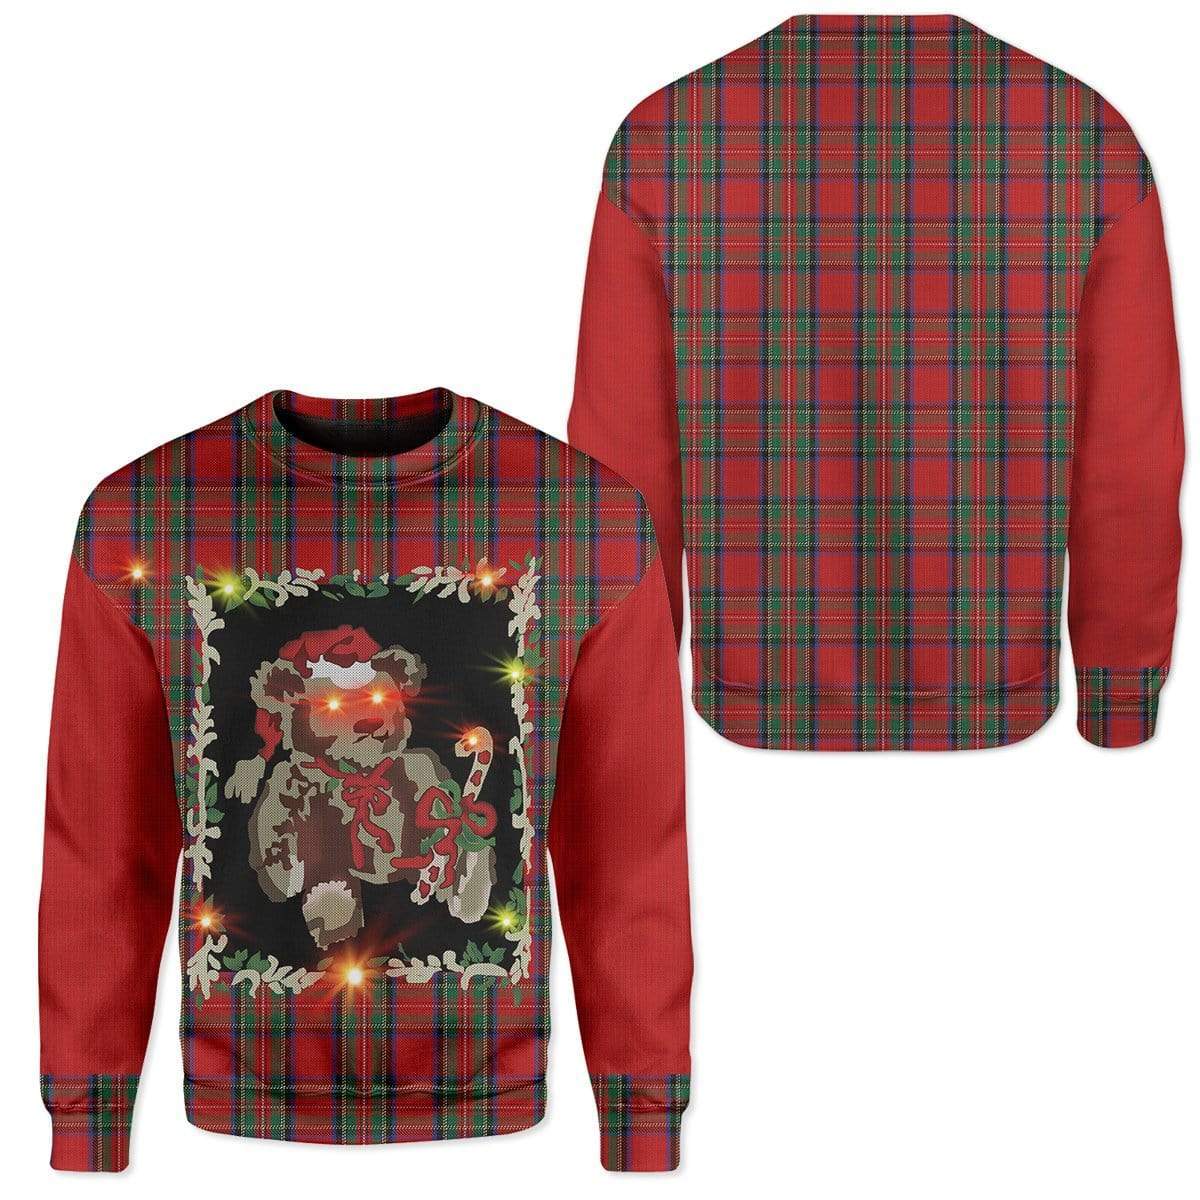 Custom T-shirt - Long Sleeves Ugly Christmas Bear Christmas Sweater Jumper HD-GH20665 Ugly Christmas Sweater 